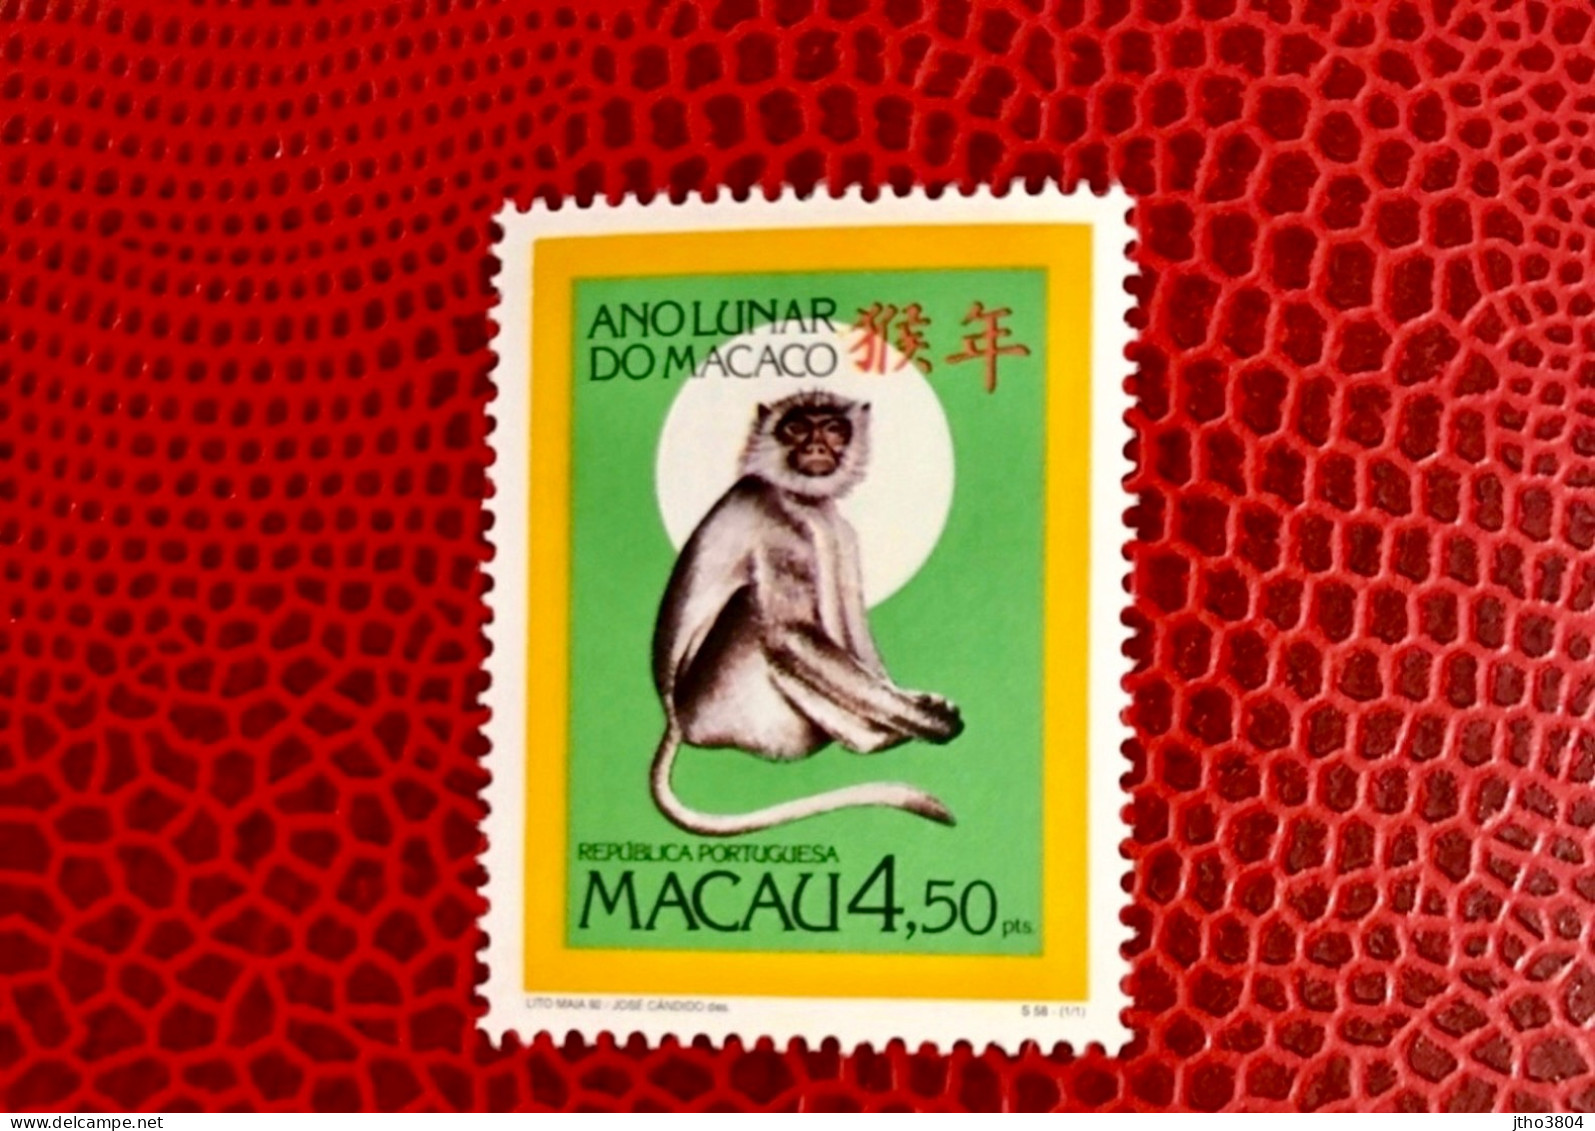 MACAO 1992 1v Année Singe Neuf MNH ** YT 658 Mamíferos Mammals Säugetiere Mammiferi Mammifère CHINA MACAU - Monkeys